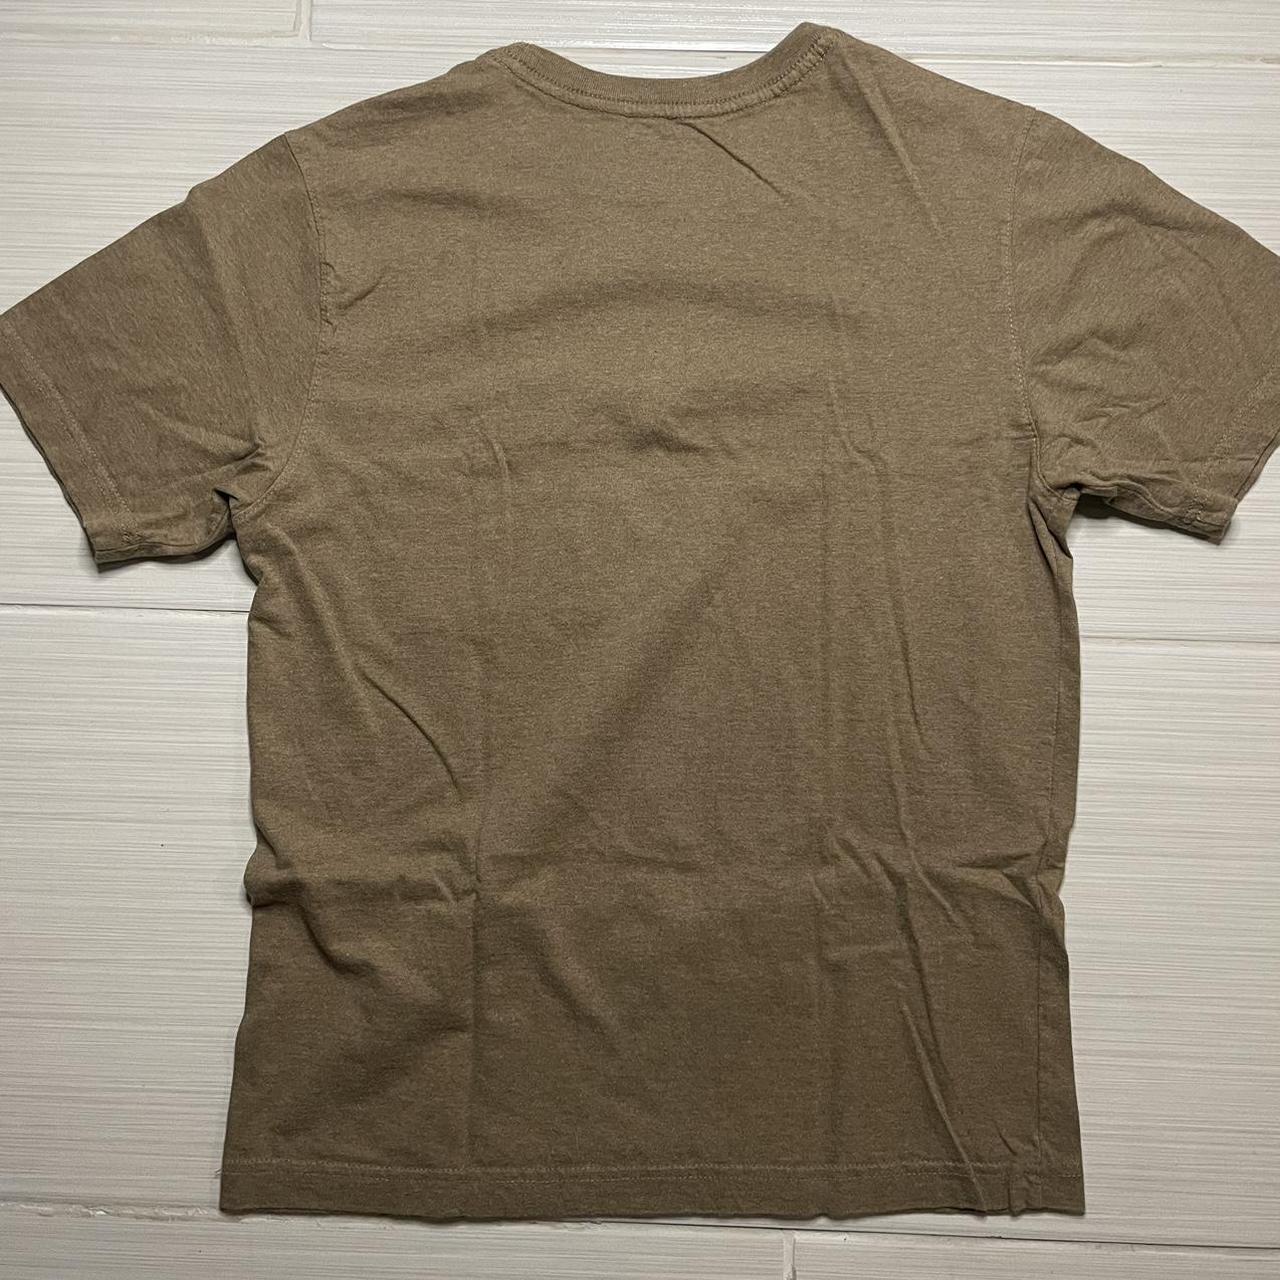 Cotswold Outdoor Men's Brown T-shirt (3)